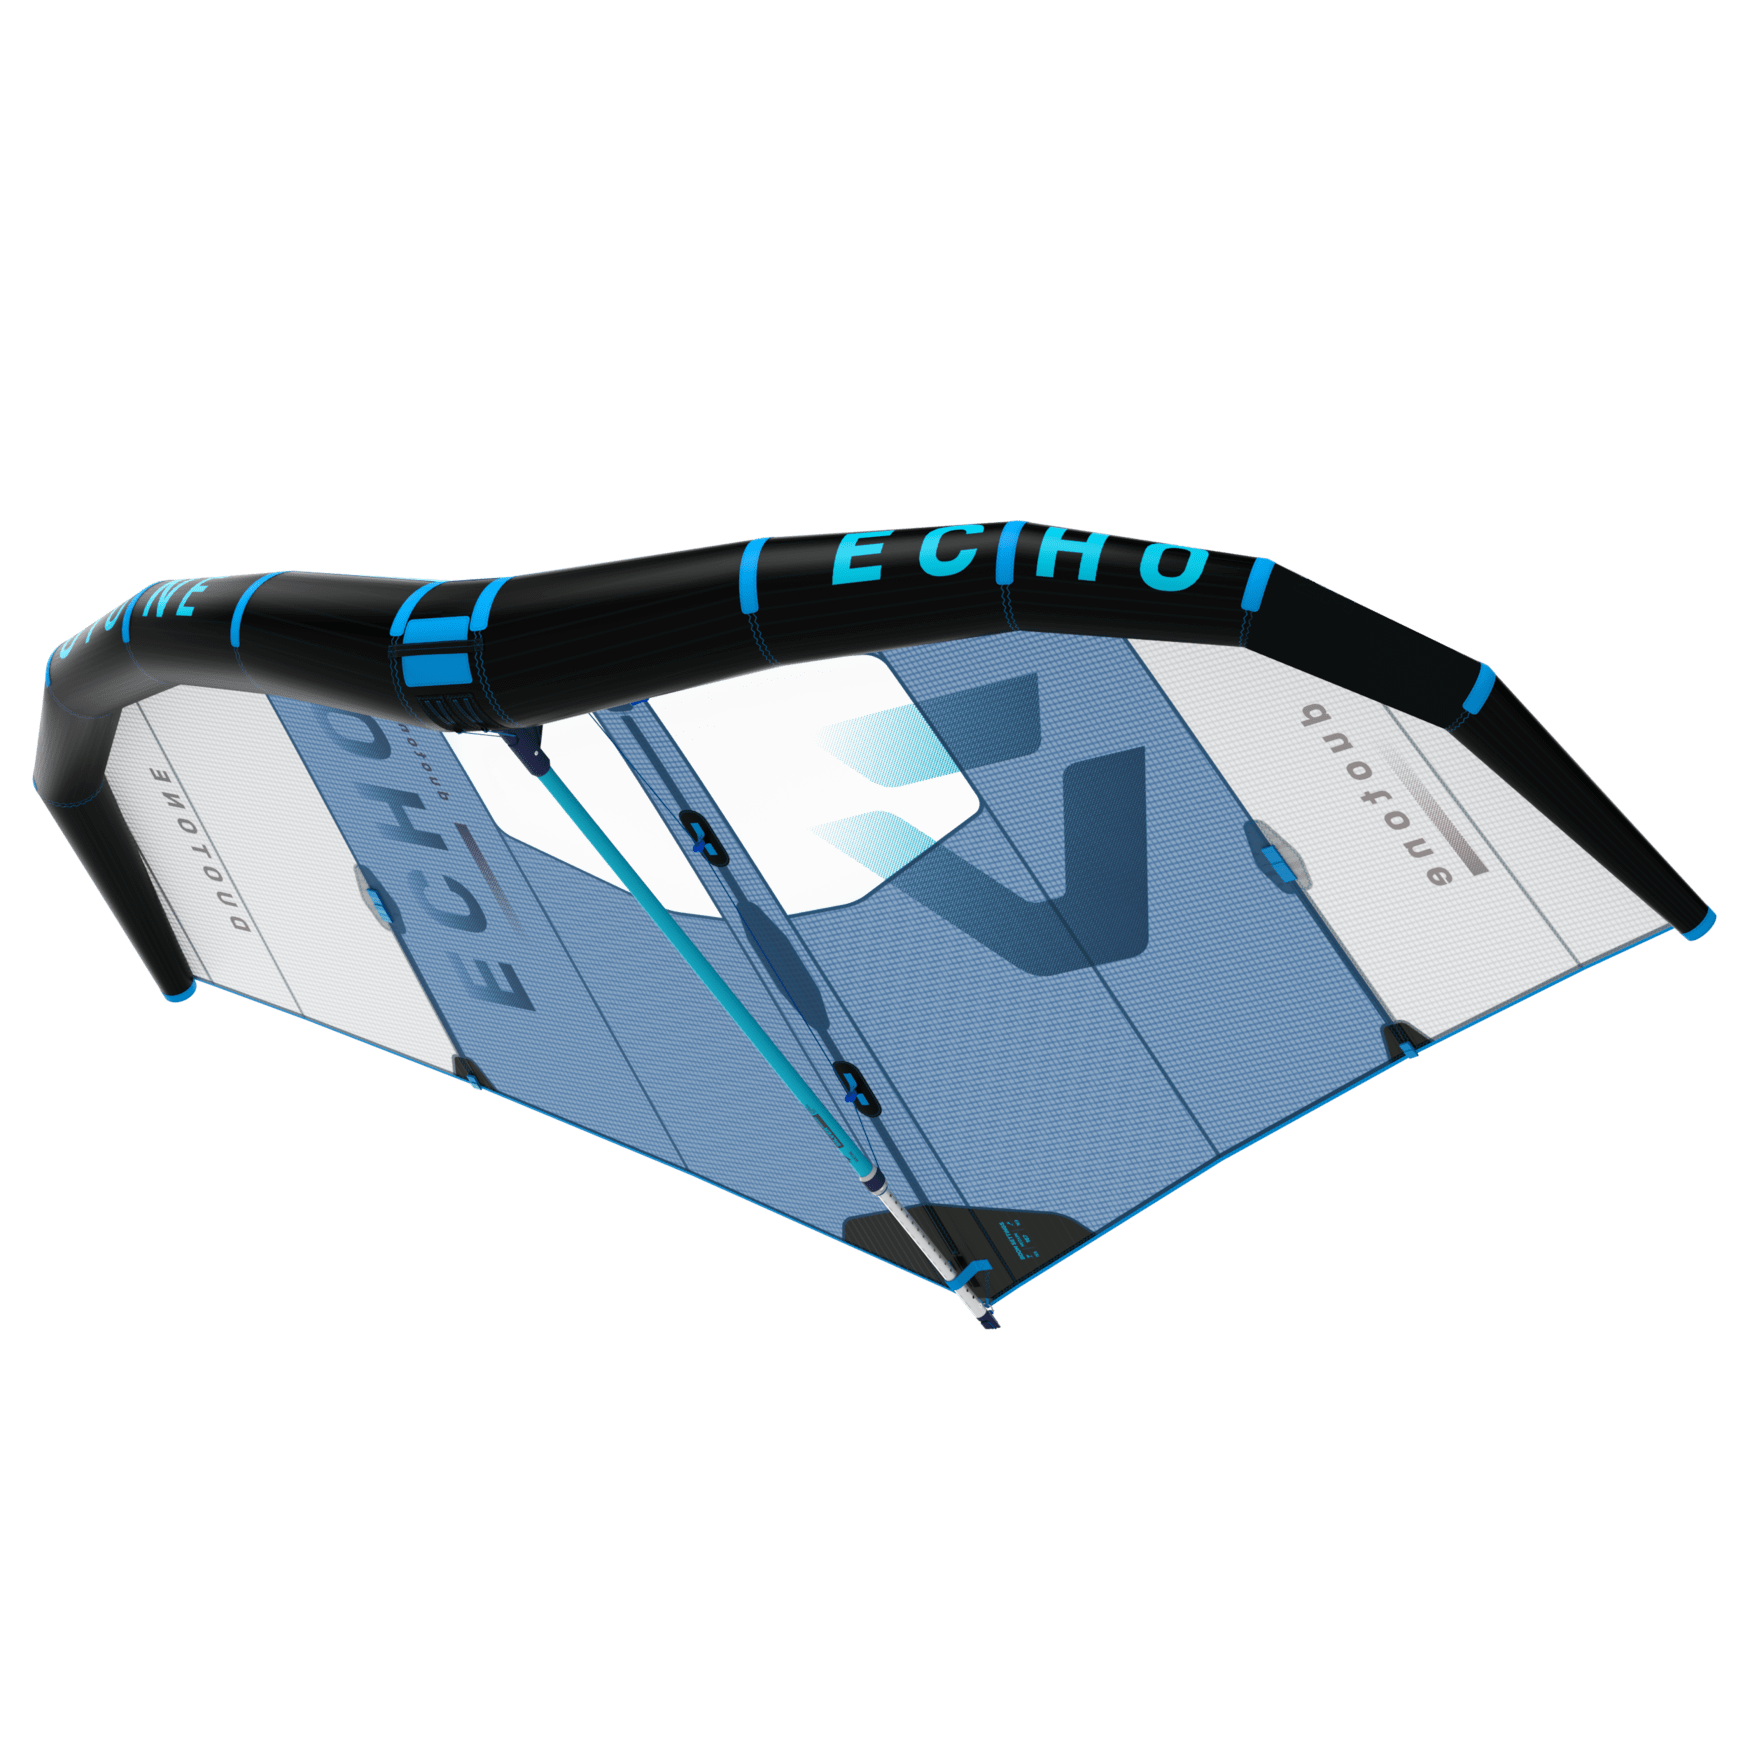 Duotone Foil Wing ECHO 2020, freeride, wave, leichtwind, lightwind, Kitejunkie